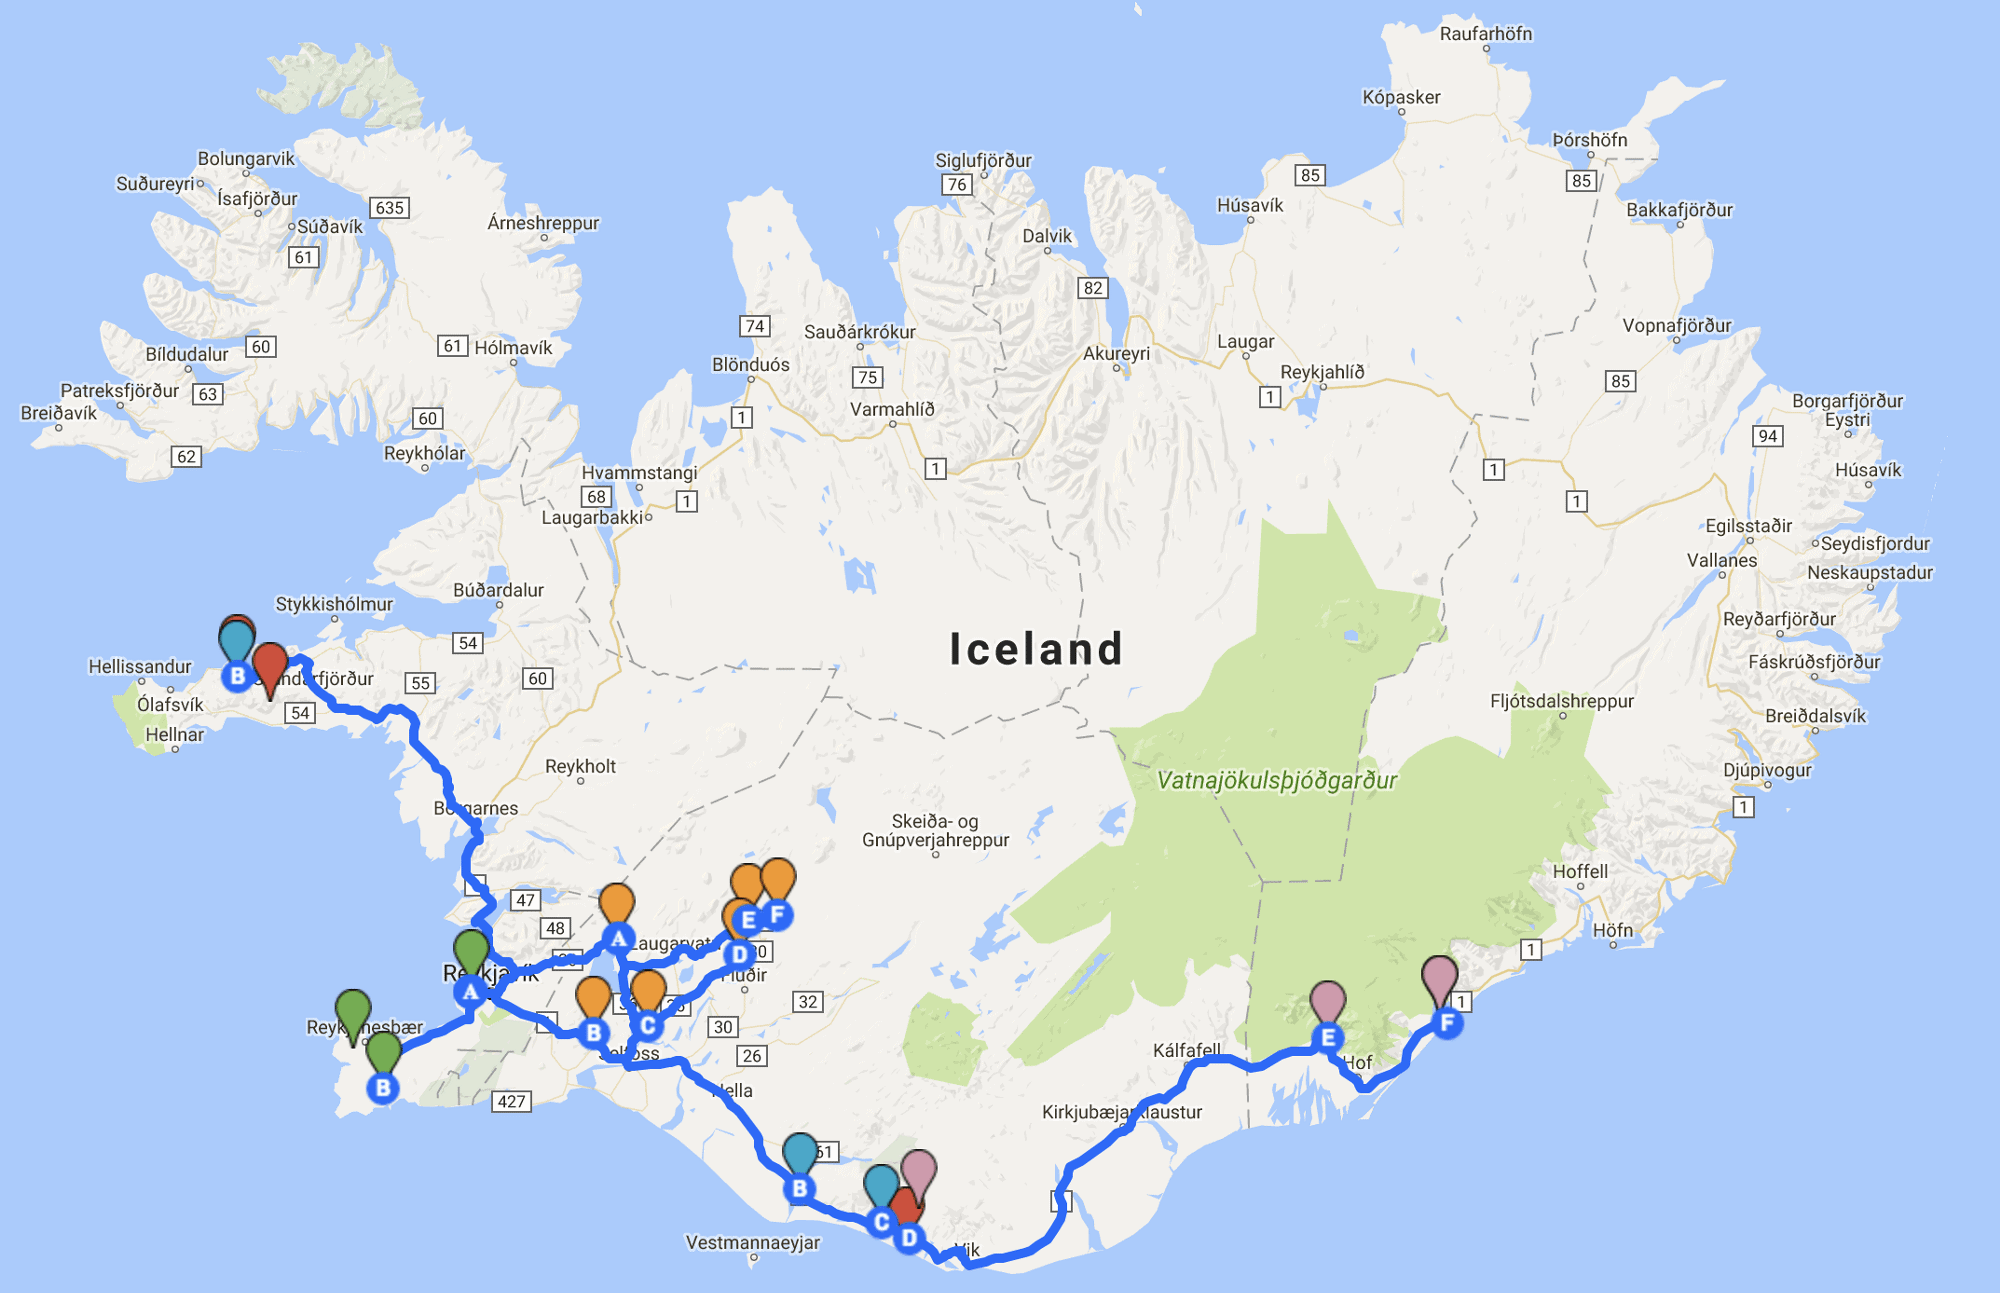 Roadtrip map for southwest Iceland